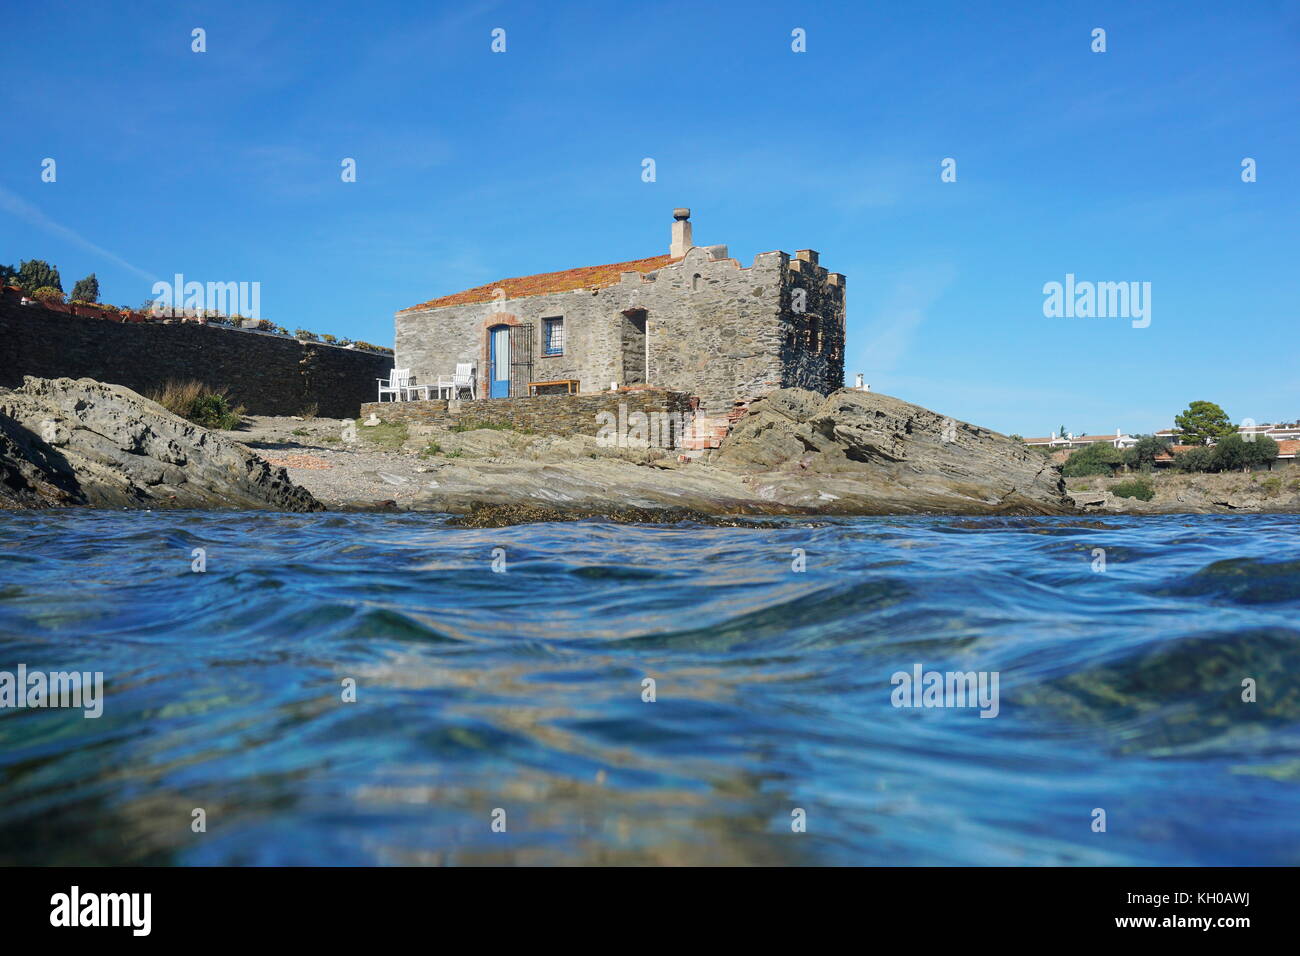 Old stony house on the seashore of the Mediterranean sea, Cadaques, Costa Brava, Catalonia, Spain Stock Photo